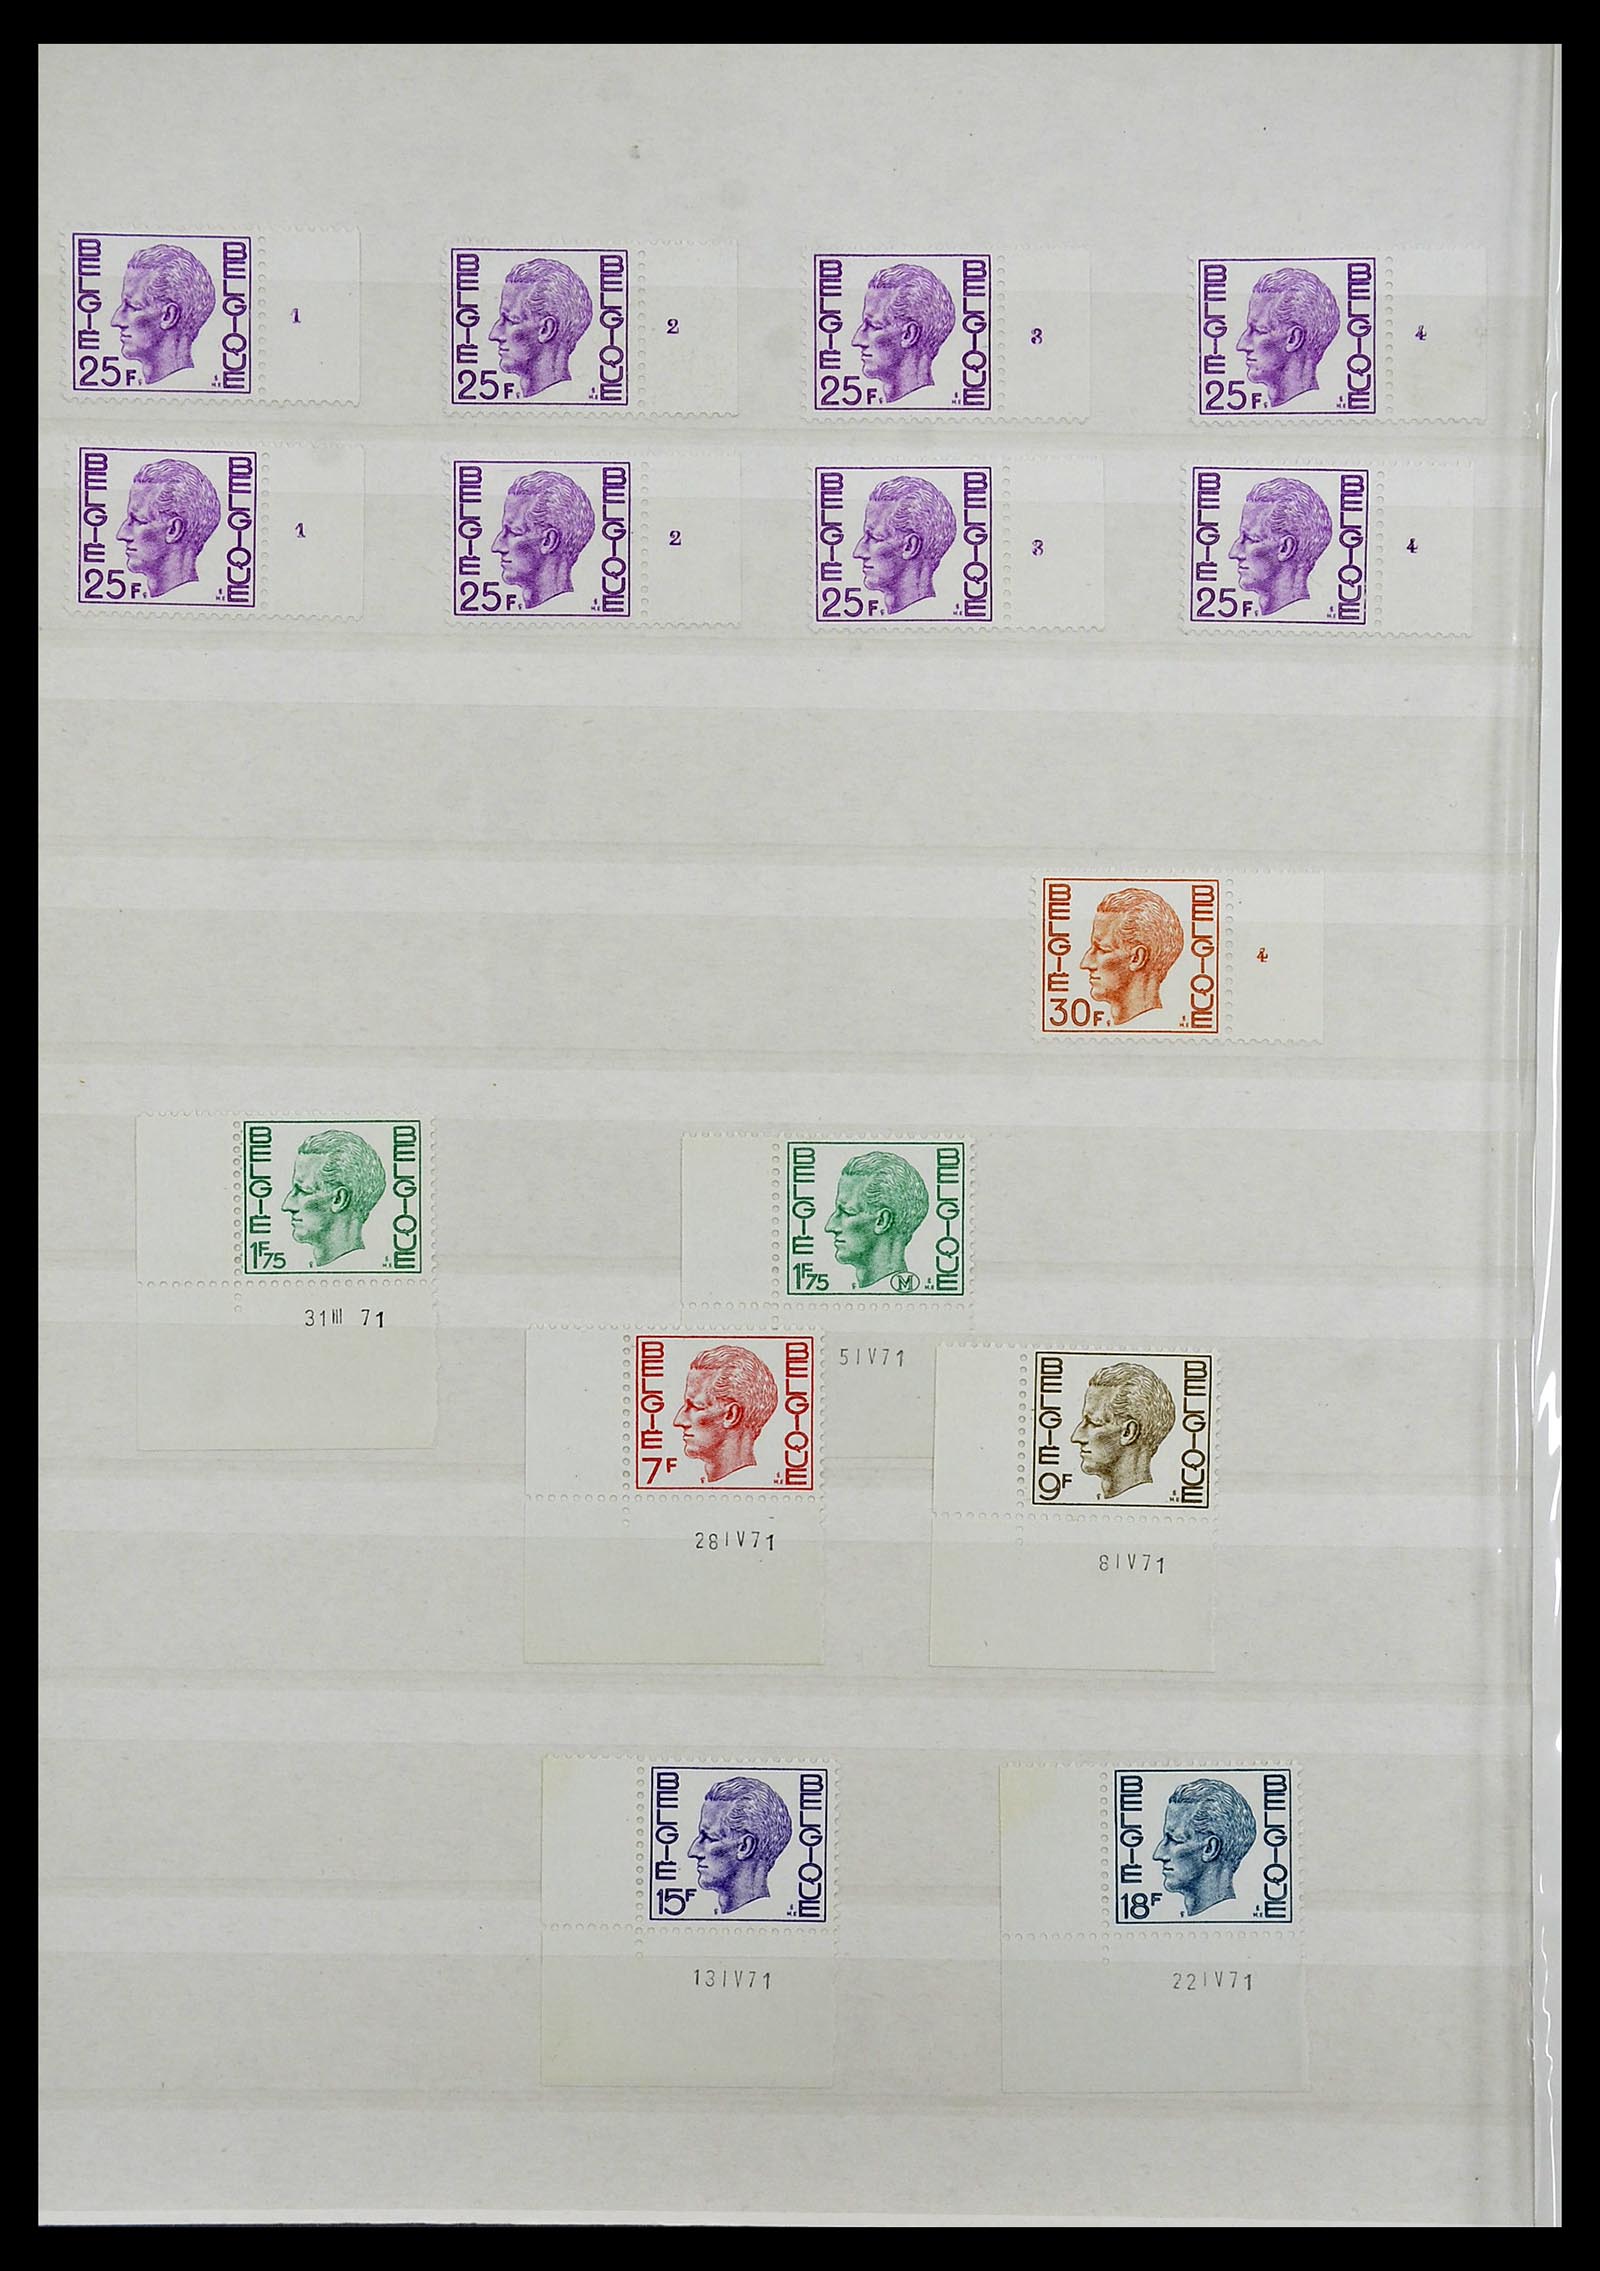 34524 098 - Postzegelverzameling 34524 België plaat en etsingnummers 1963-1990.